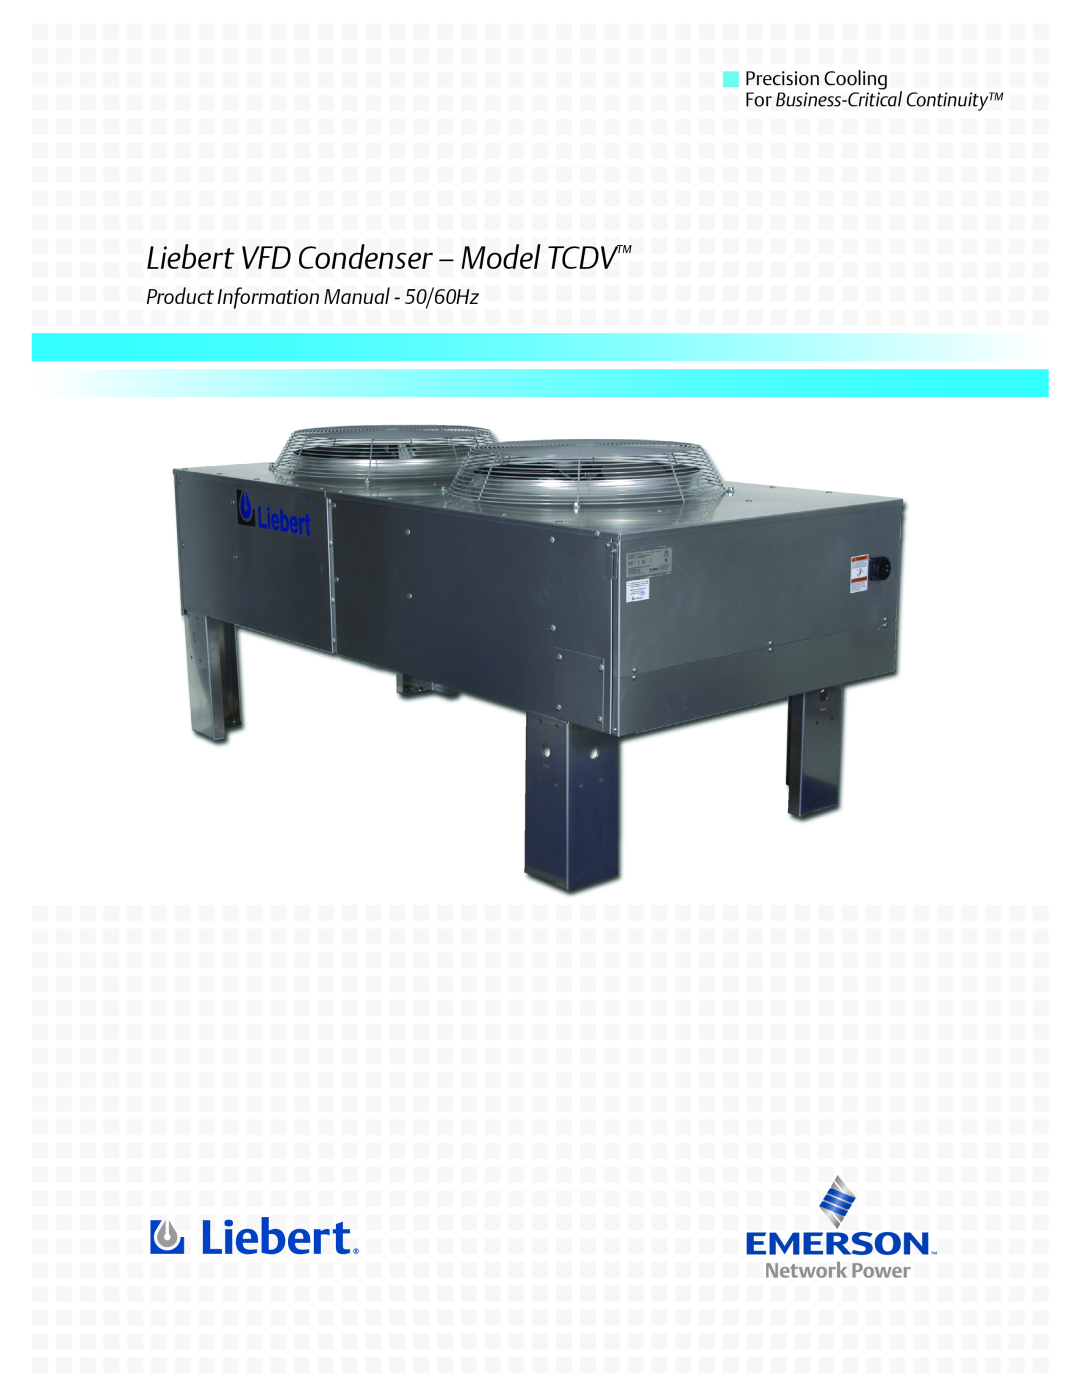 Emerson TCDVTM manual Liebert VFD Condenser - ModelTCDV, ProductInformation Manual - 50/60Hz, Precision Cooling 